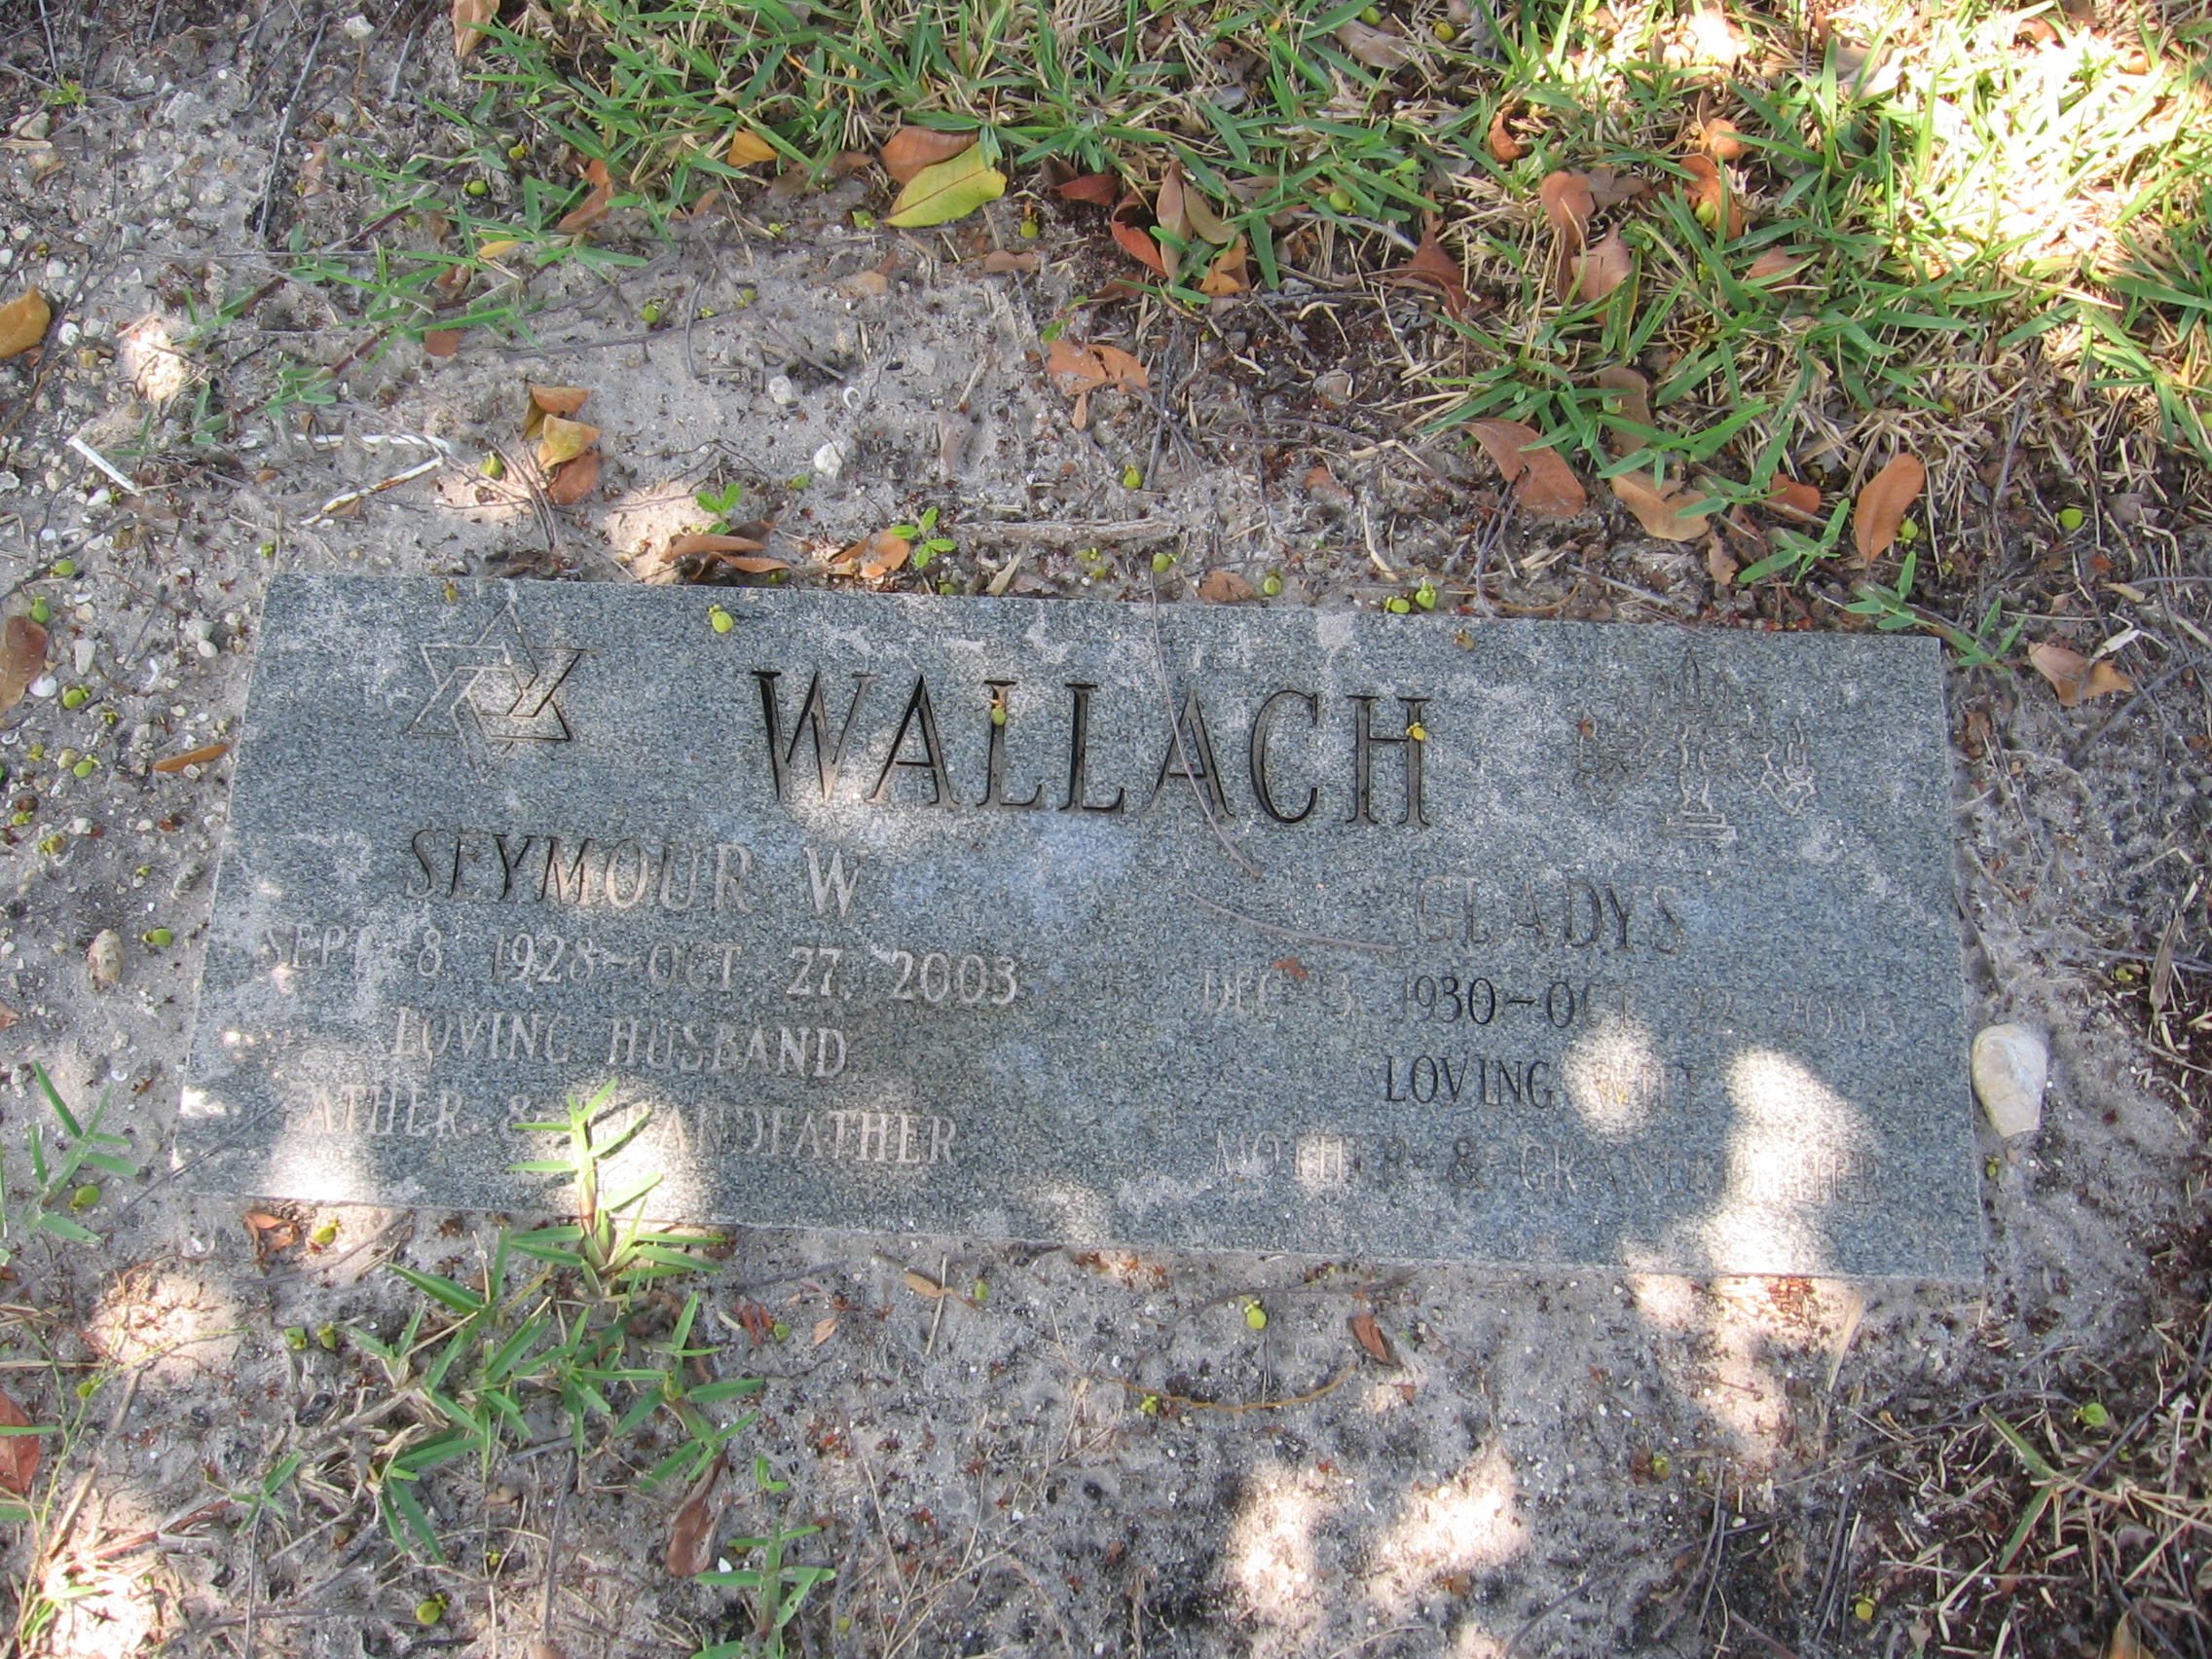 Seymour W Wallach